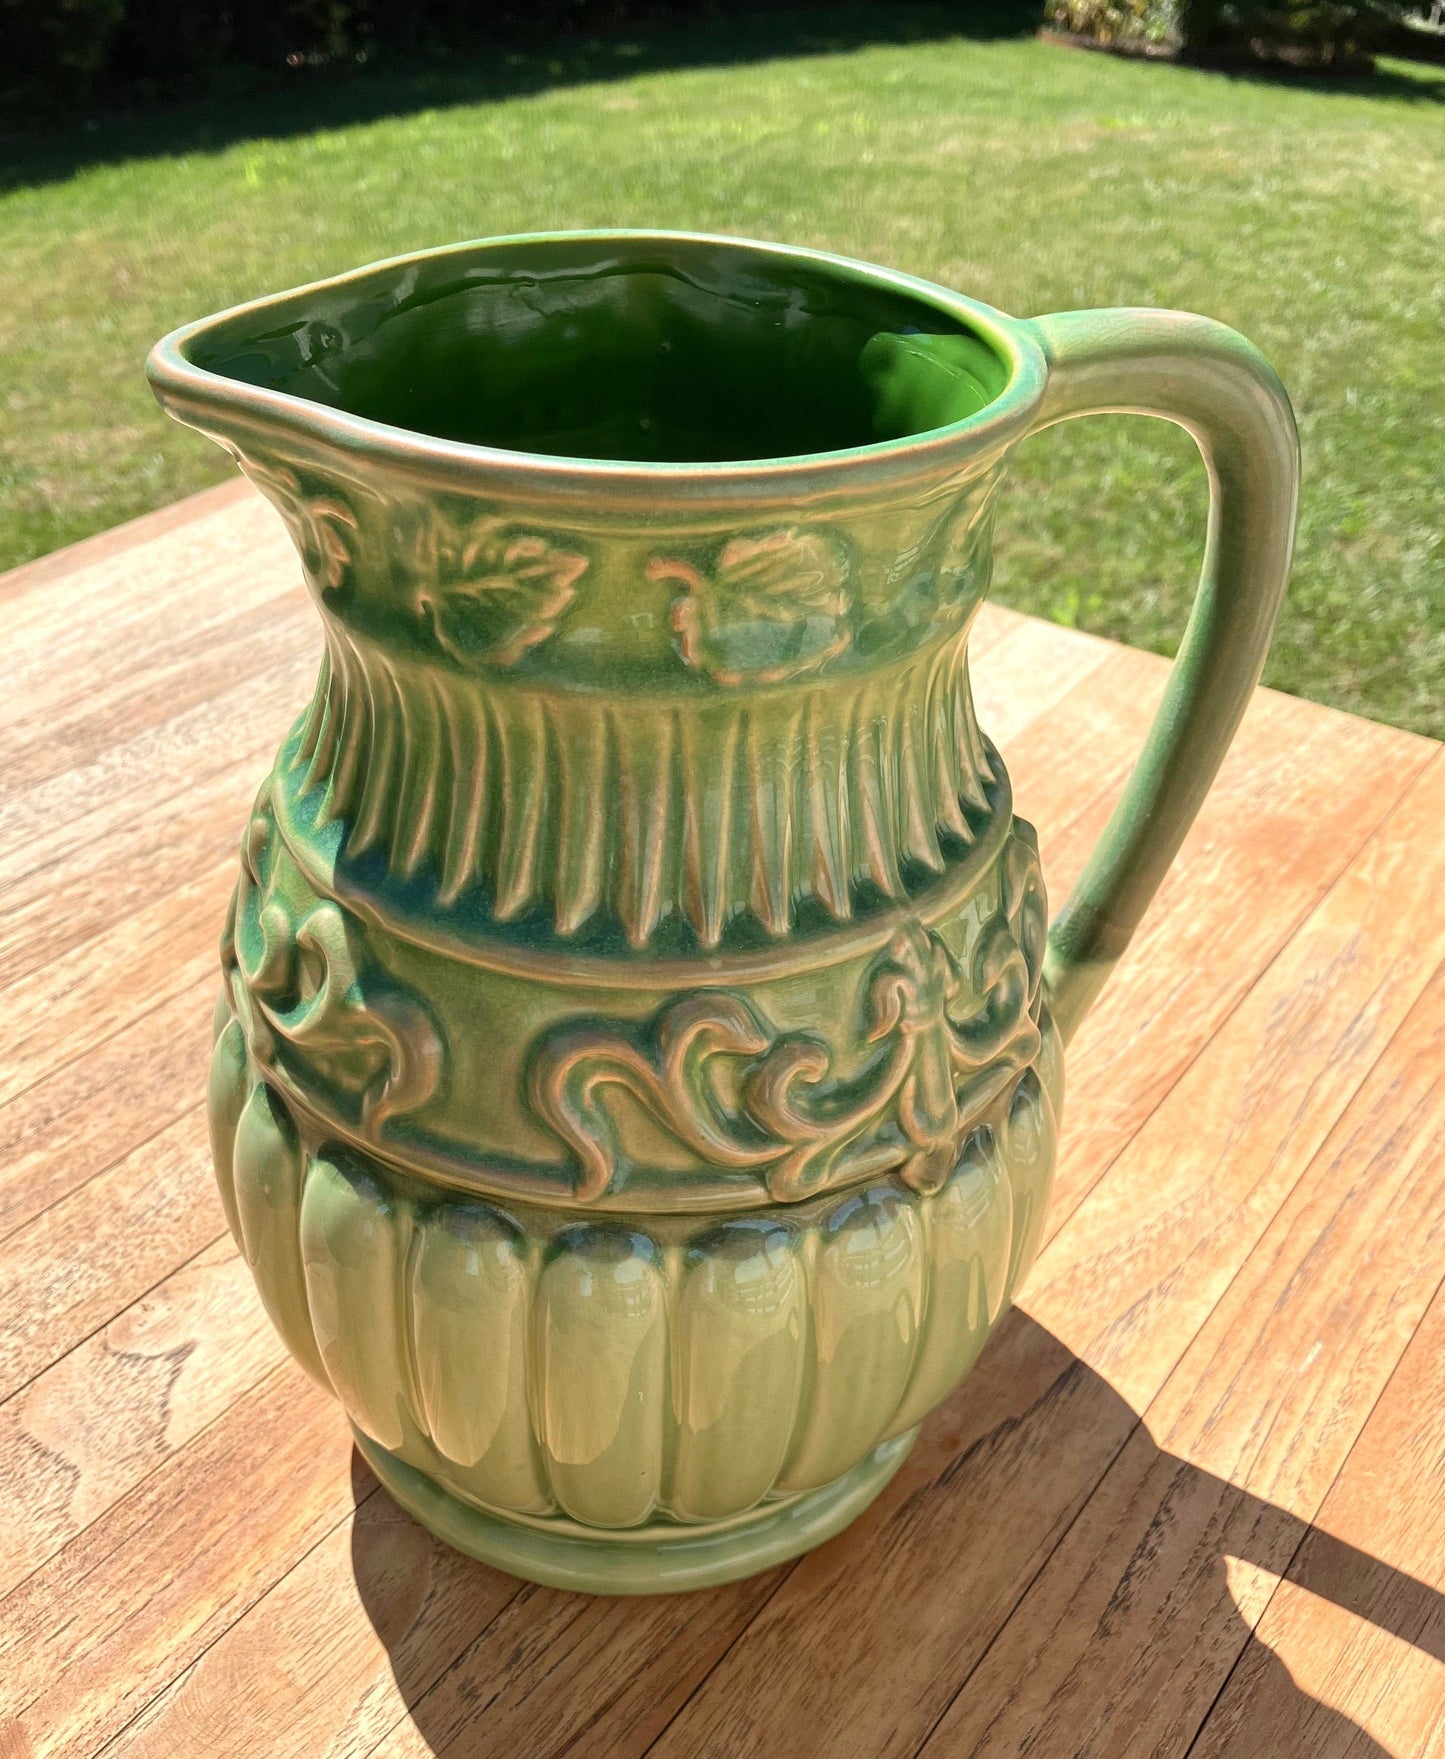 Italiving Keramikkrug Mediterraner Krug aus Keramik mit antikem Design - Höhe 25 cm Ø 21 cm